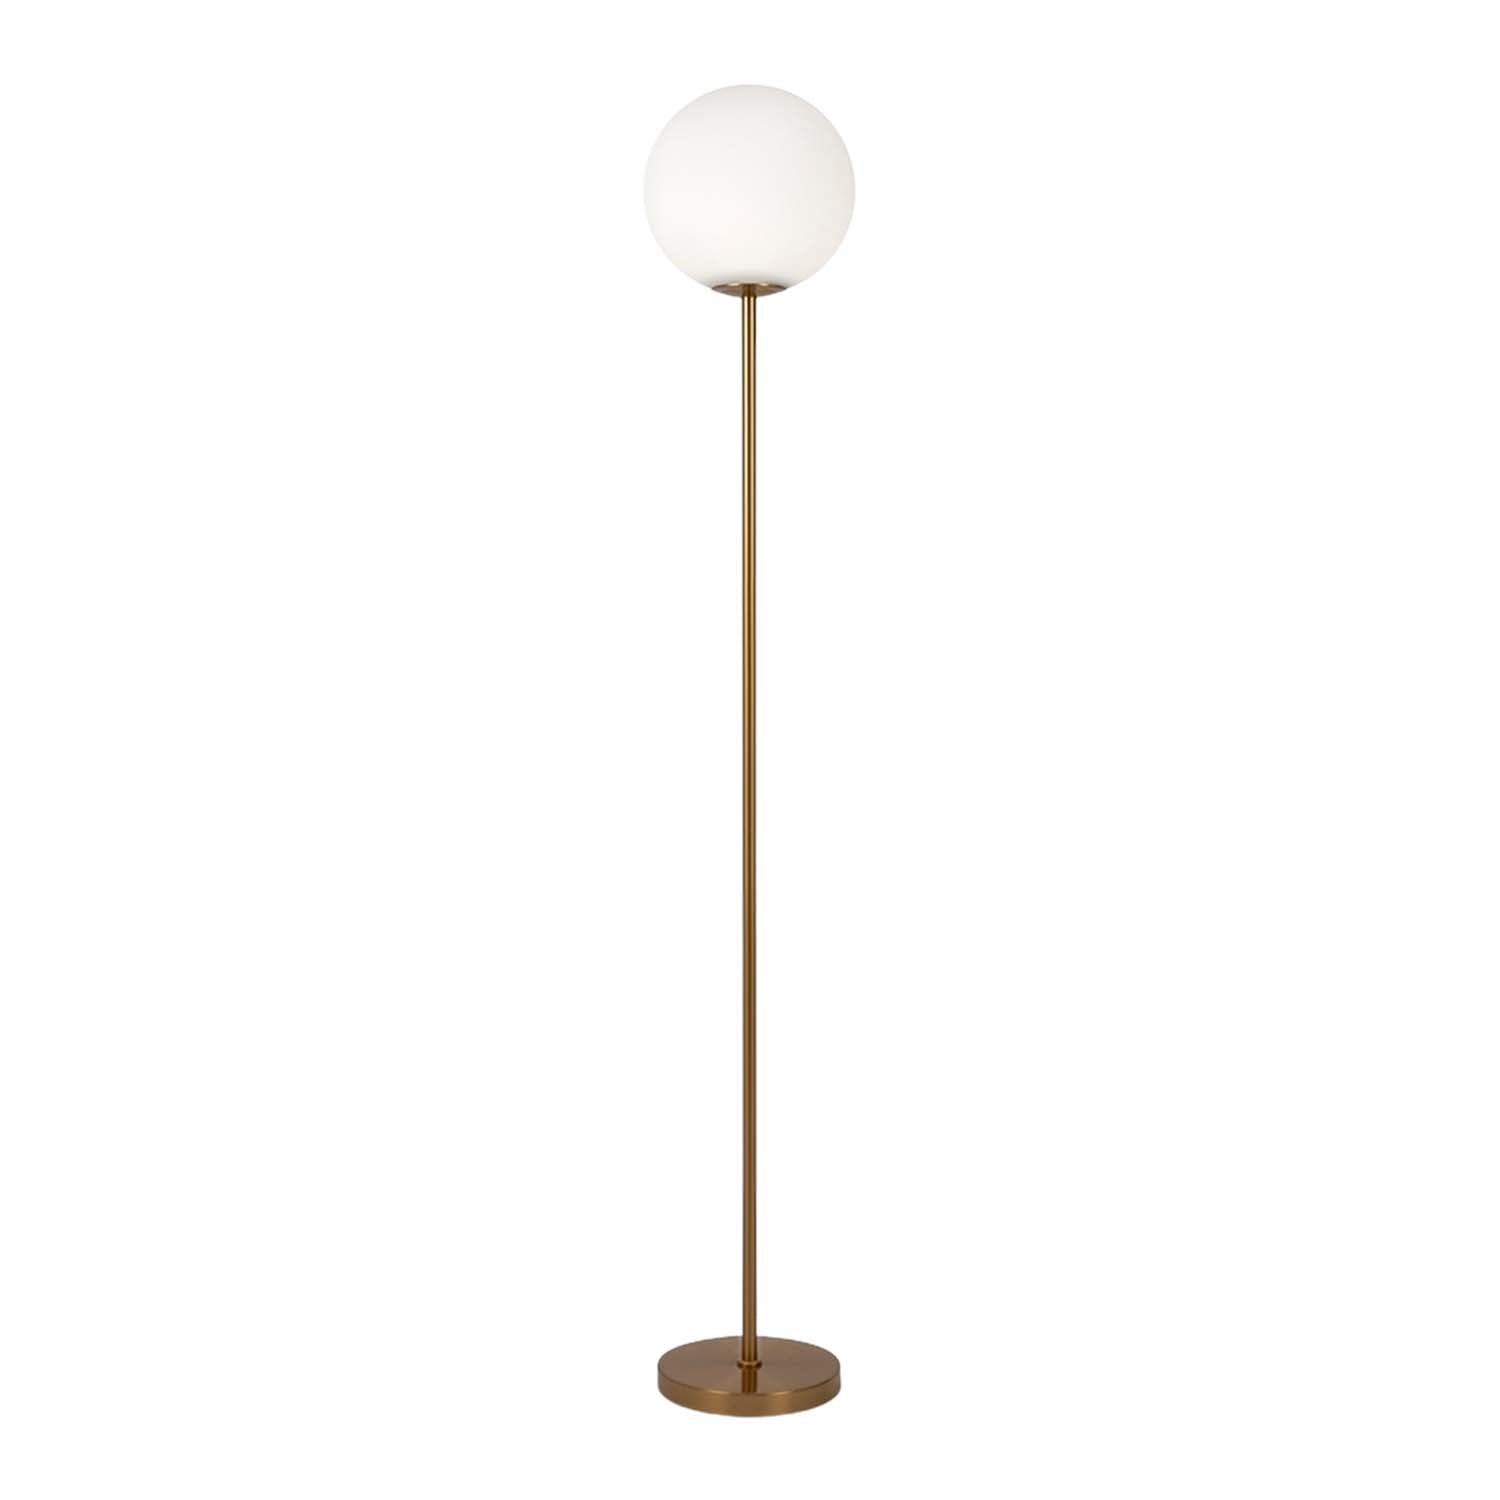 RING - Design floor lamp in gold or black, glass ball